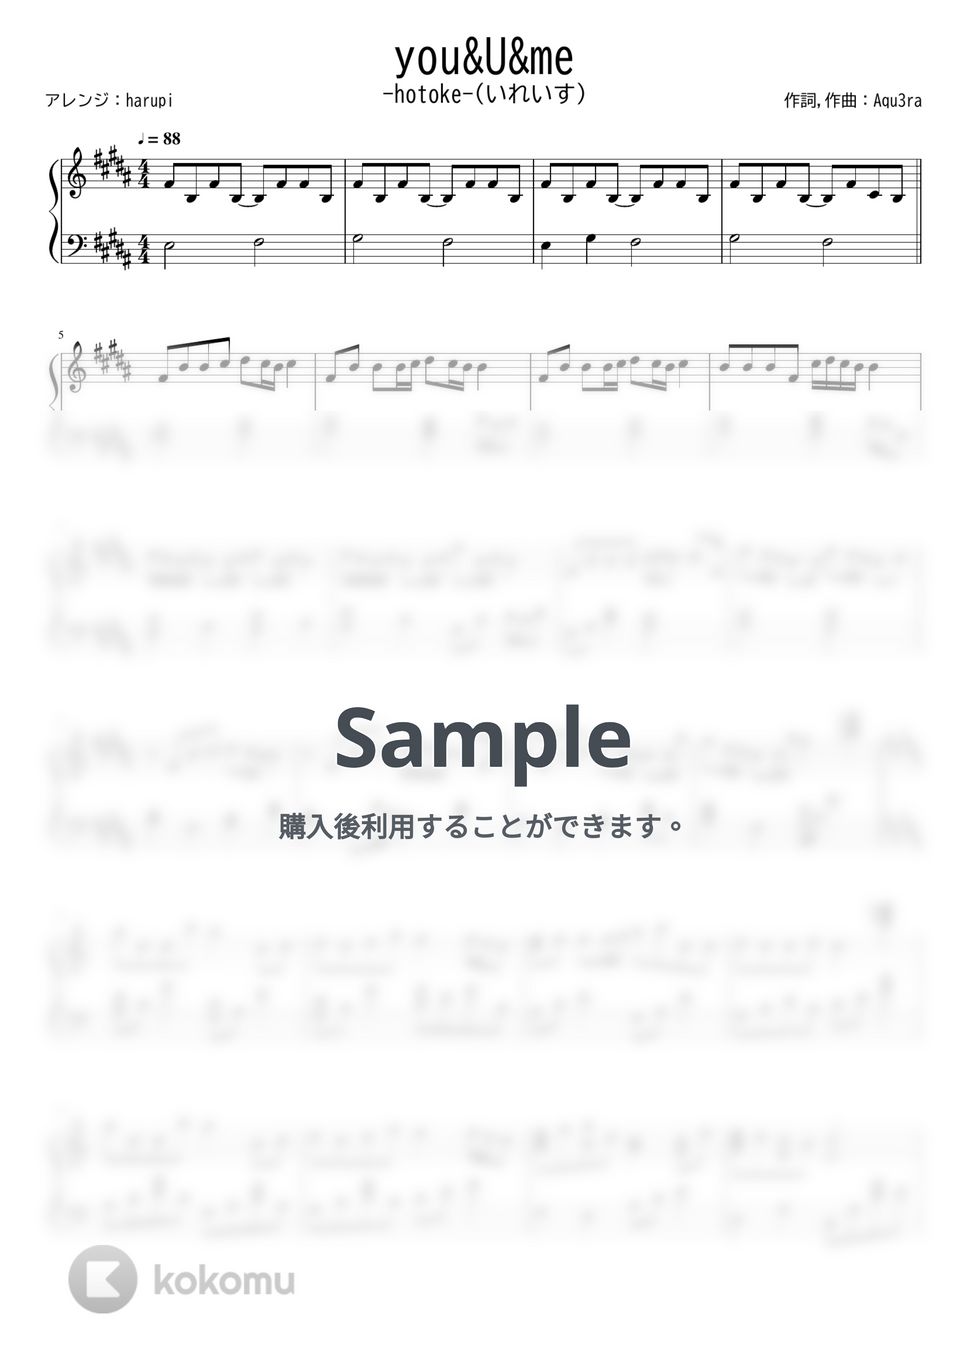 -hotoke- - you&U&me (いれいす、いむくん,ピアノソロ) by harupi